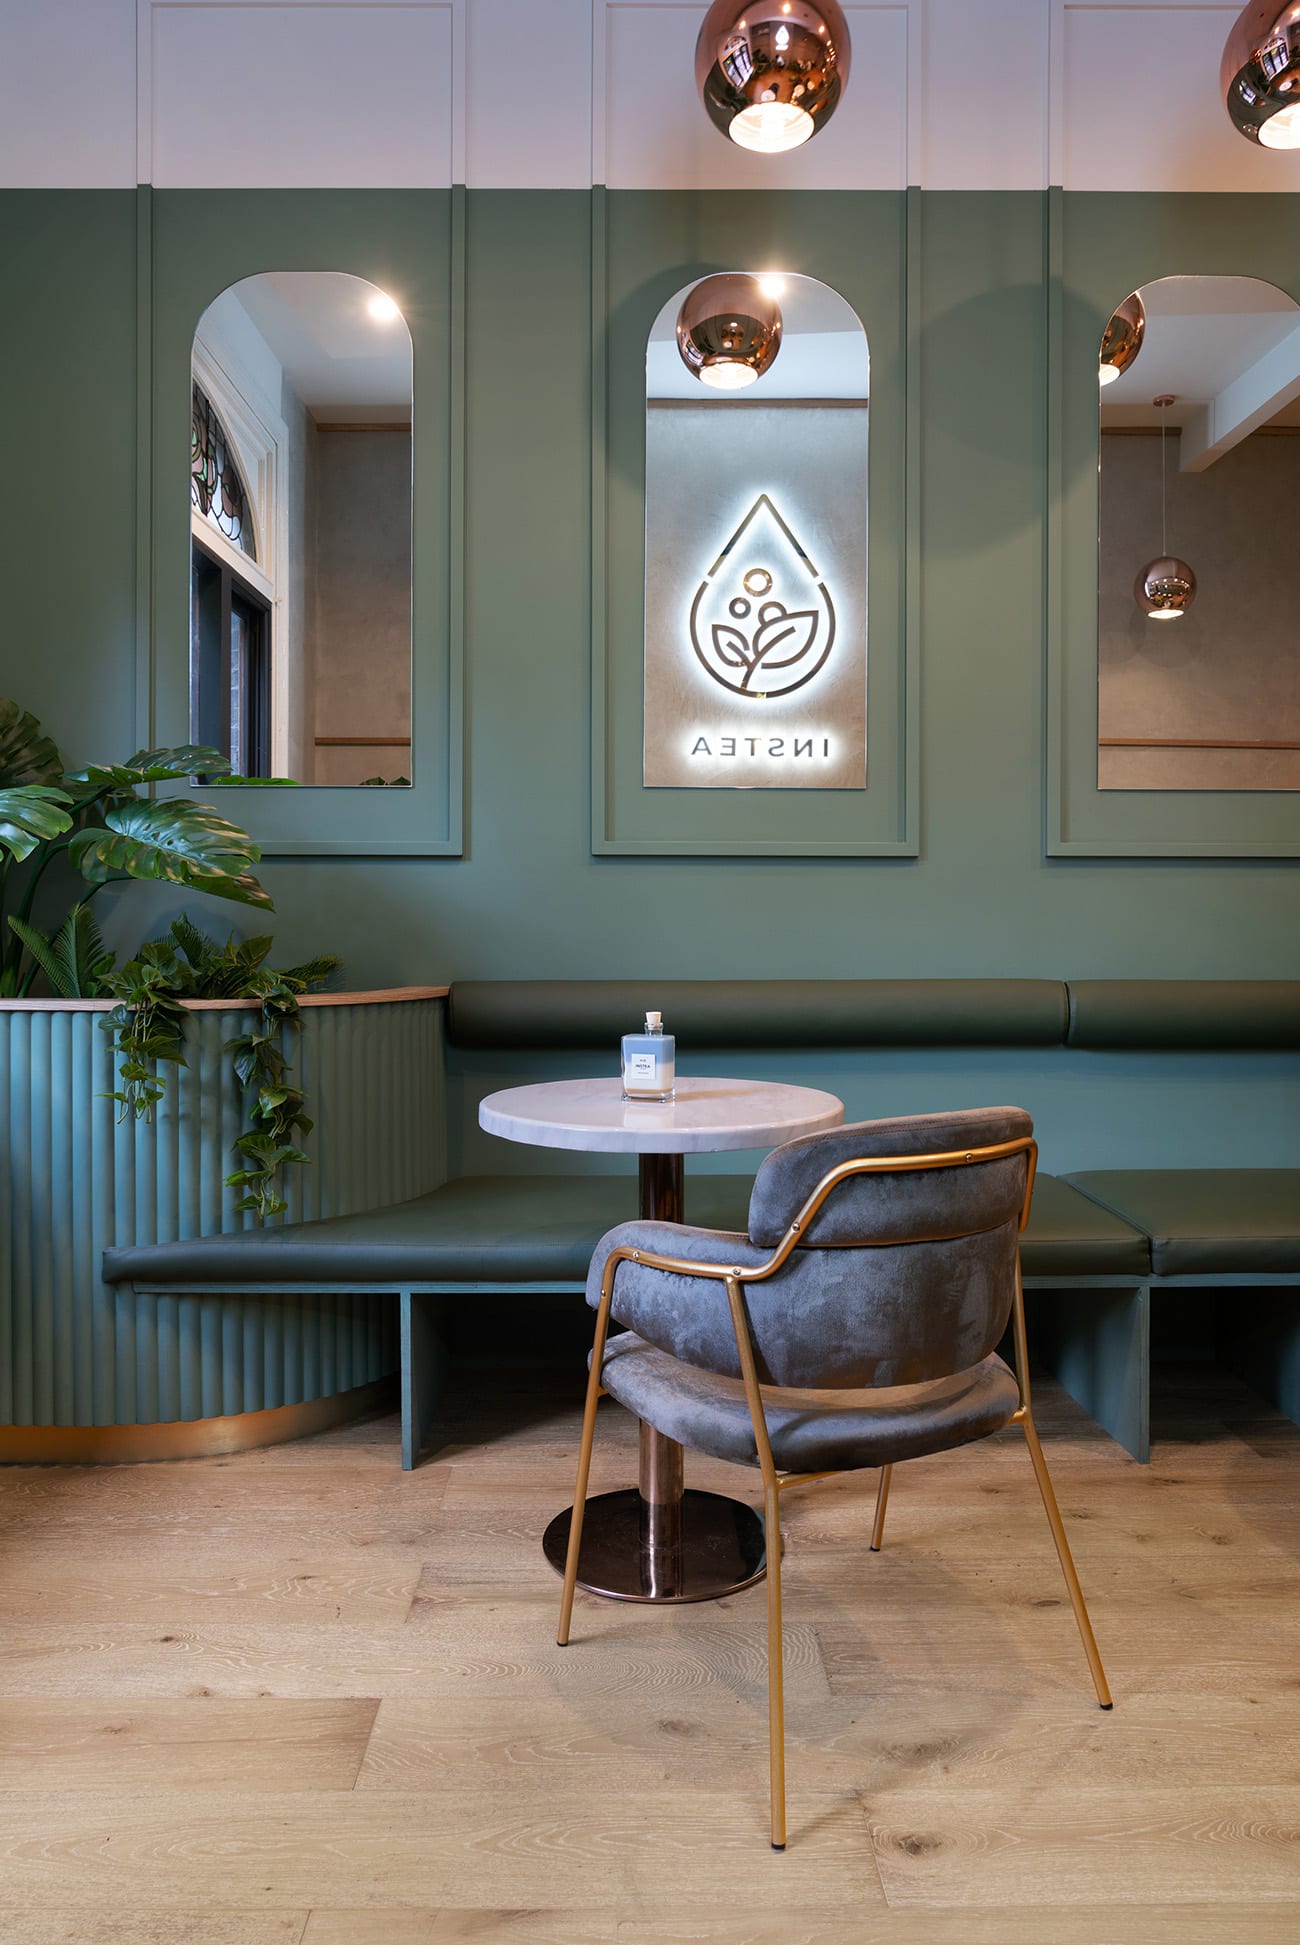 INSTEA cafe fitout, Fretard Design